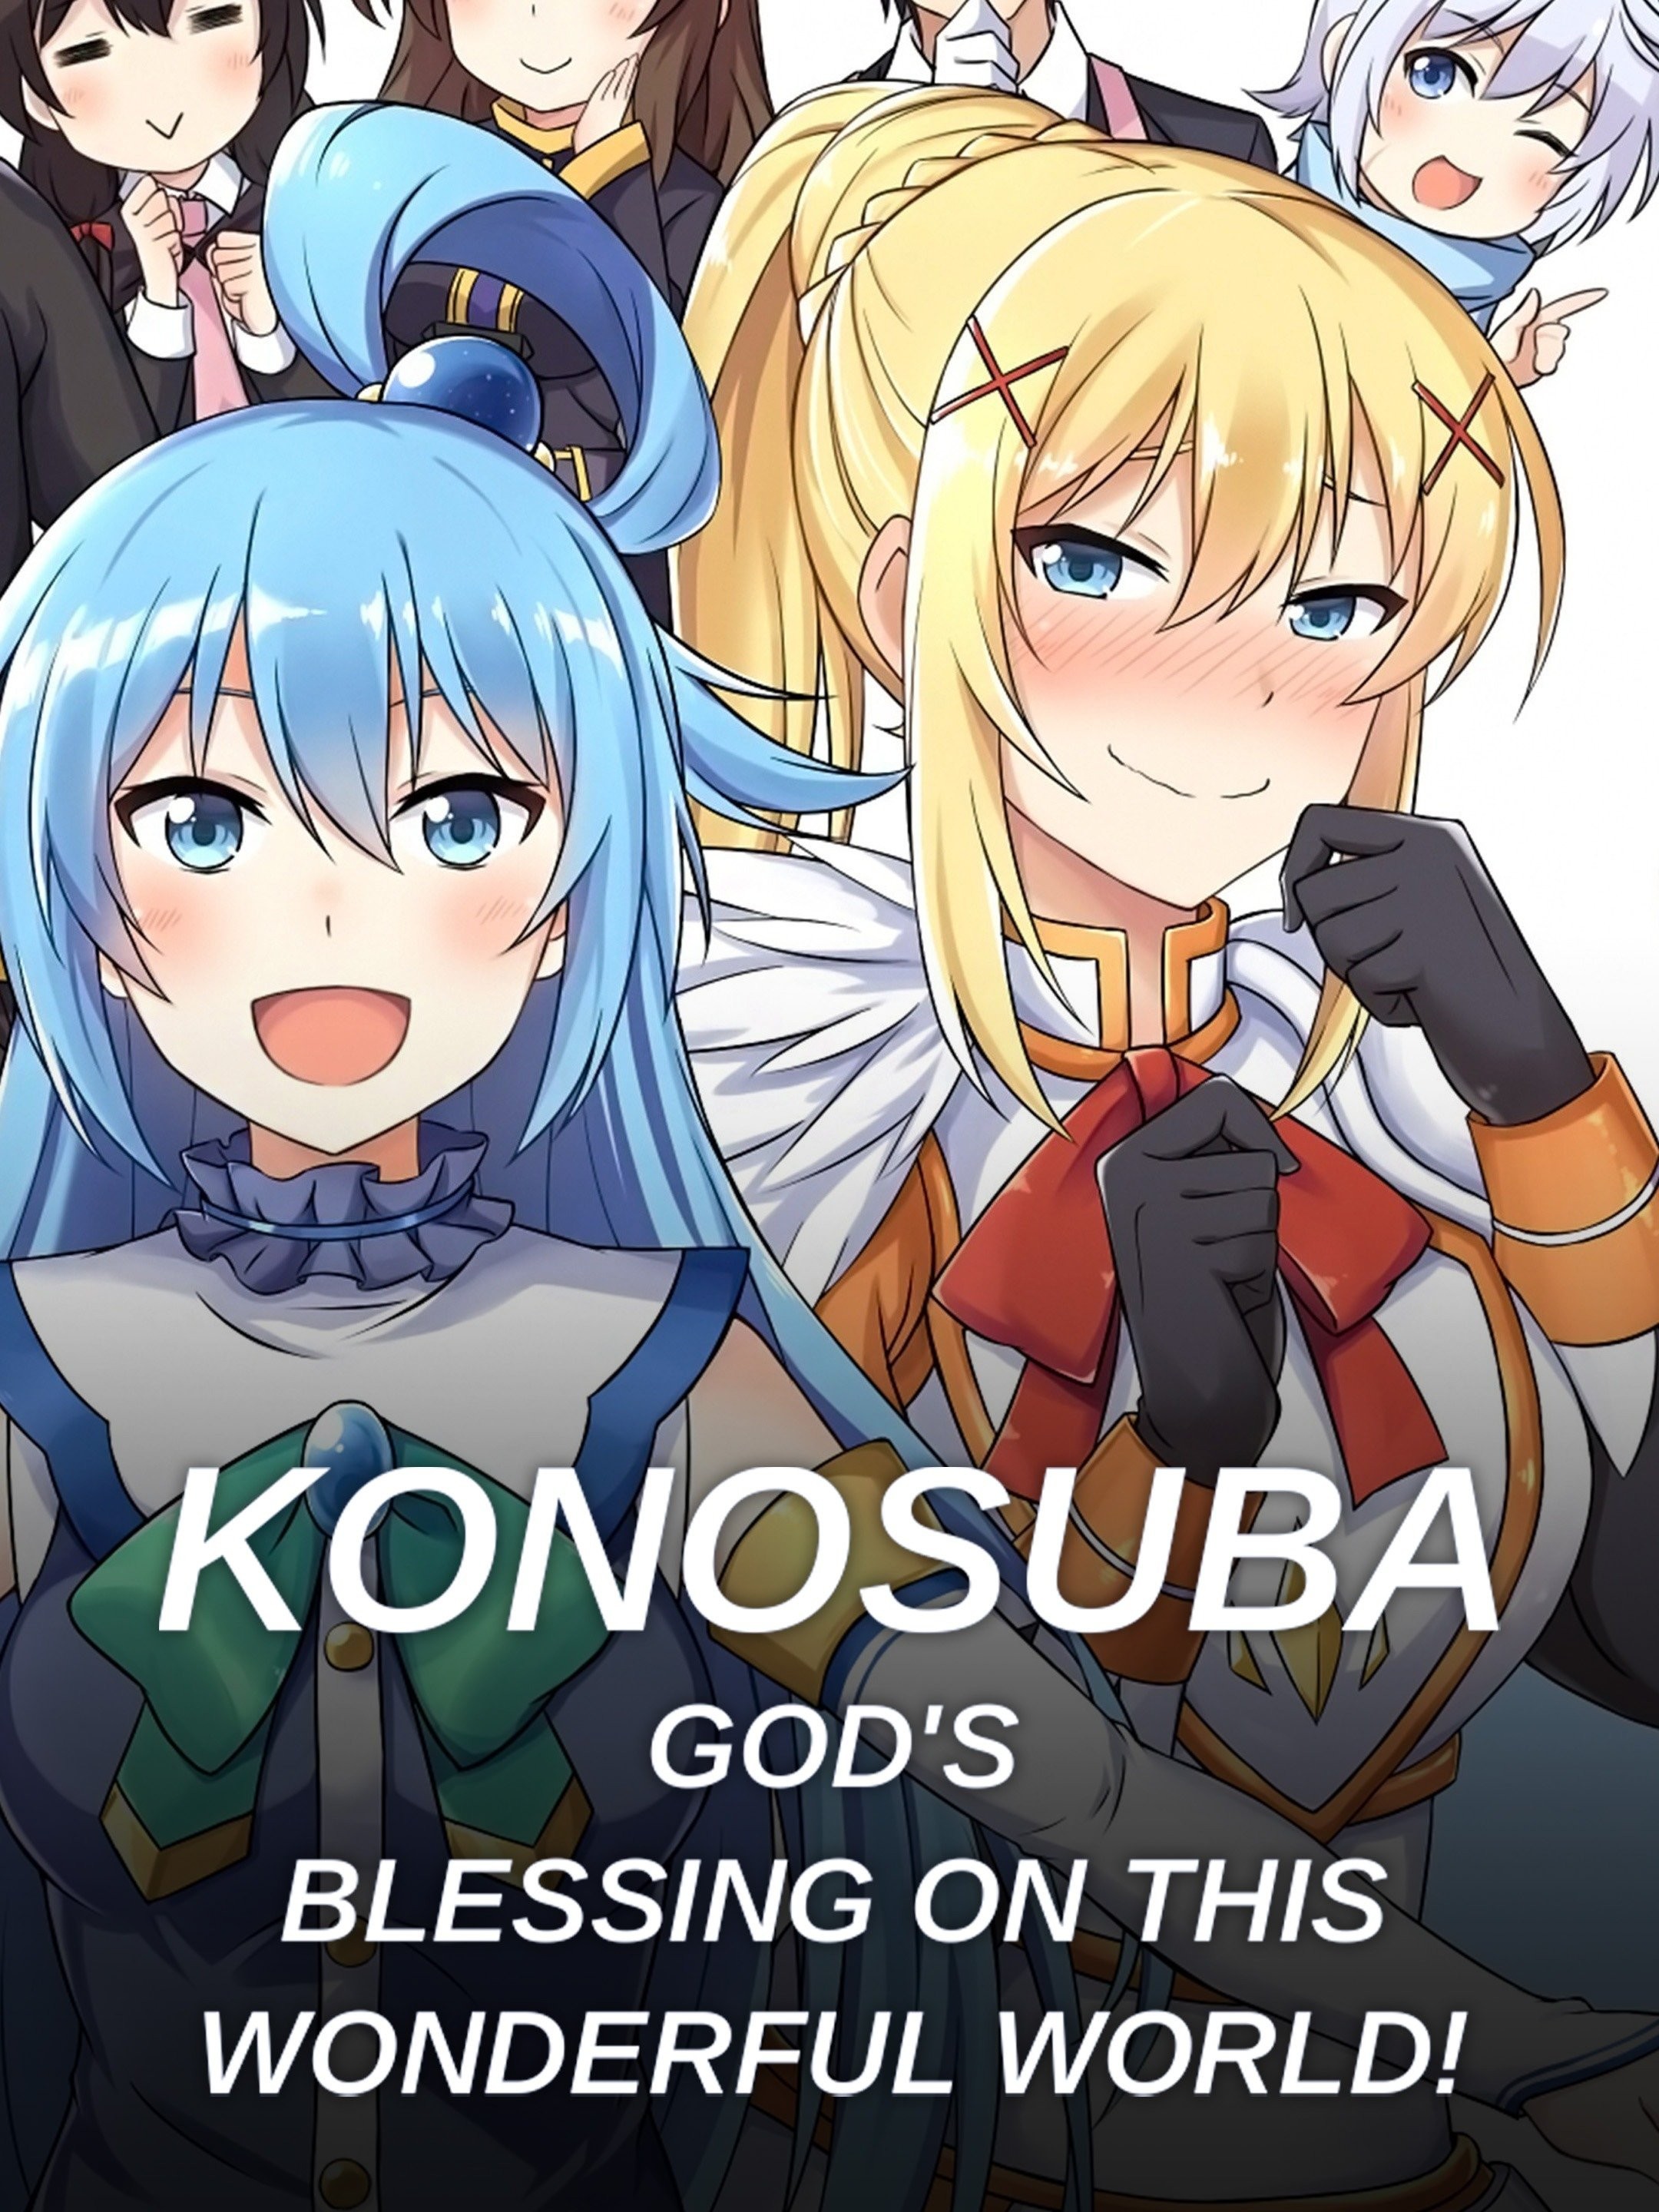 Watch KonoSuba: God's Blessing on This Wonderful World! Streaming